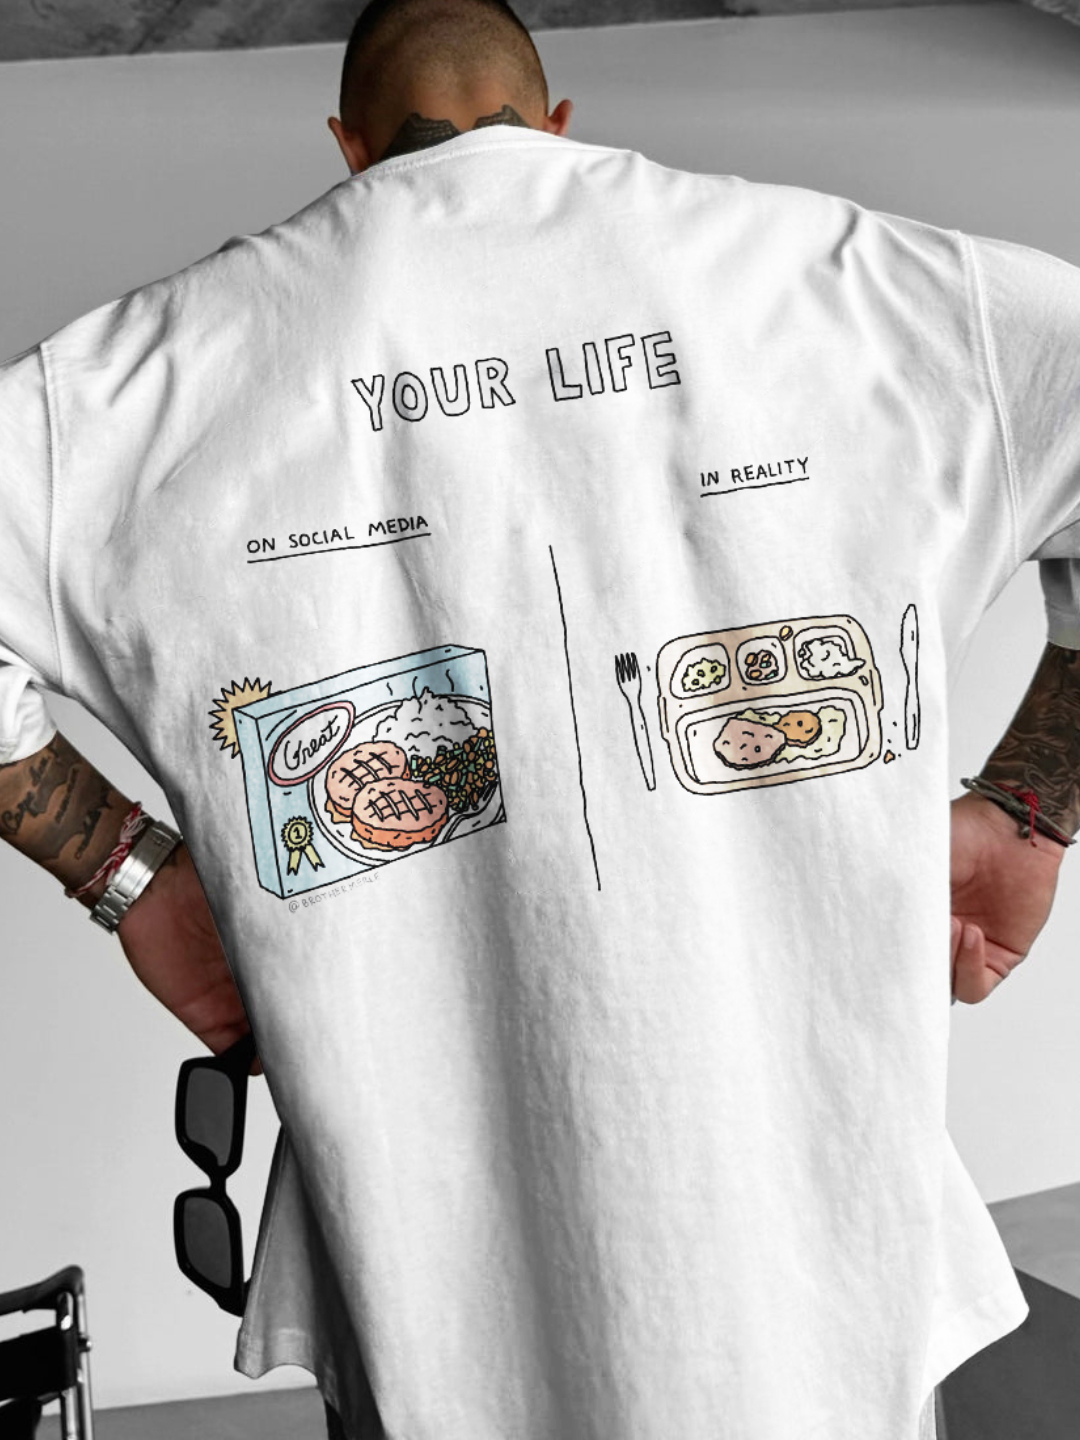 "Your life on social media VS in reality" Skate T-shirt